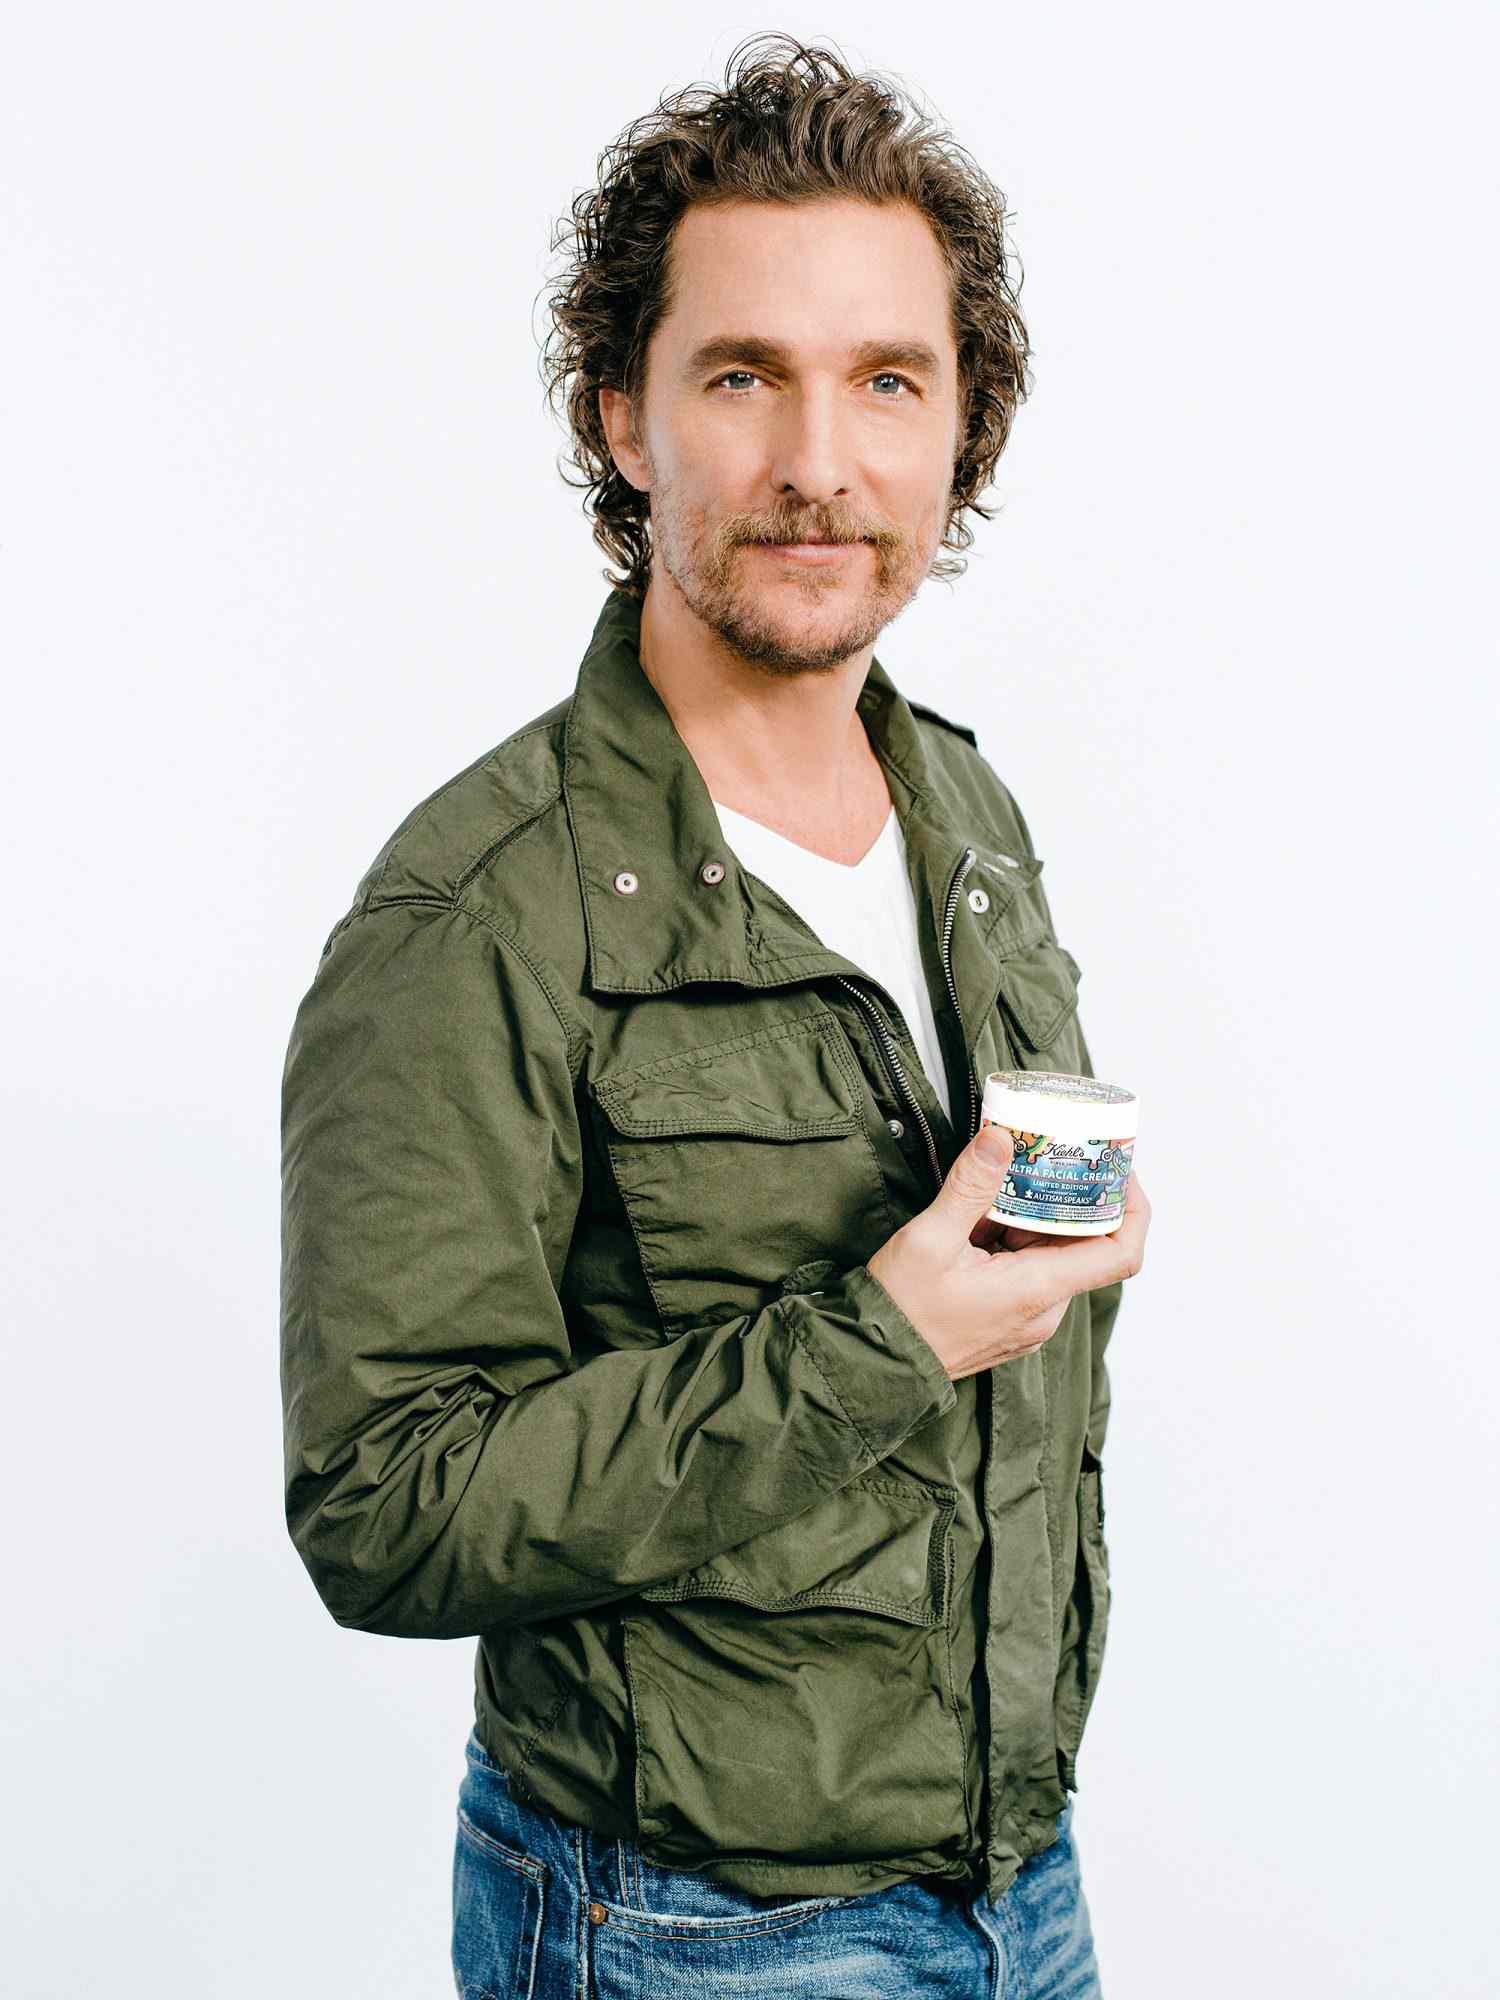 Matthew McConaughey Kiehl's partnershipCredit: Kiehl's